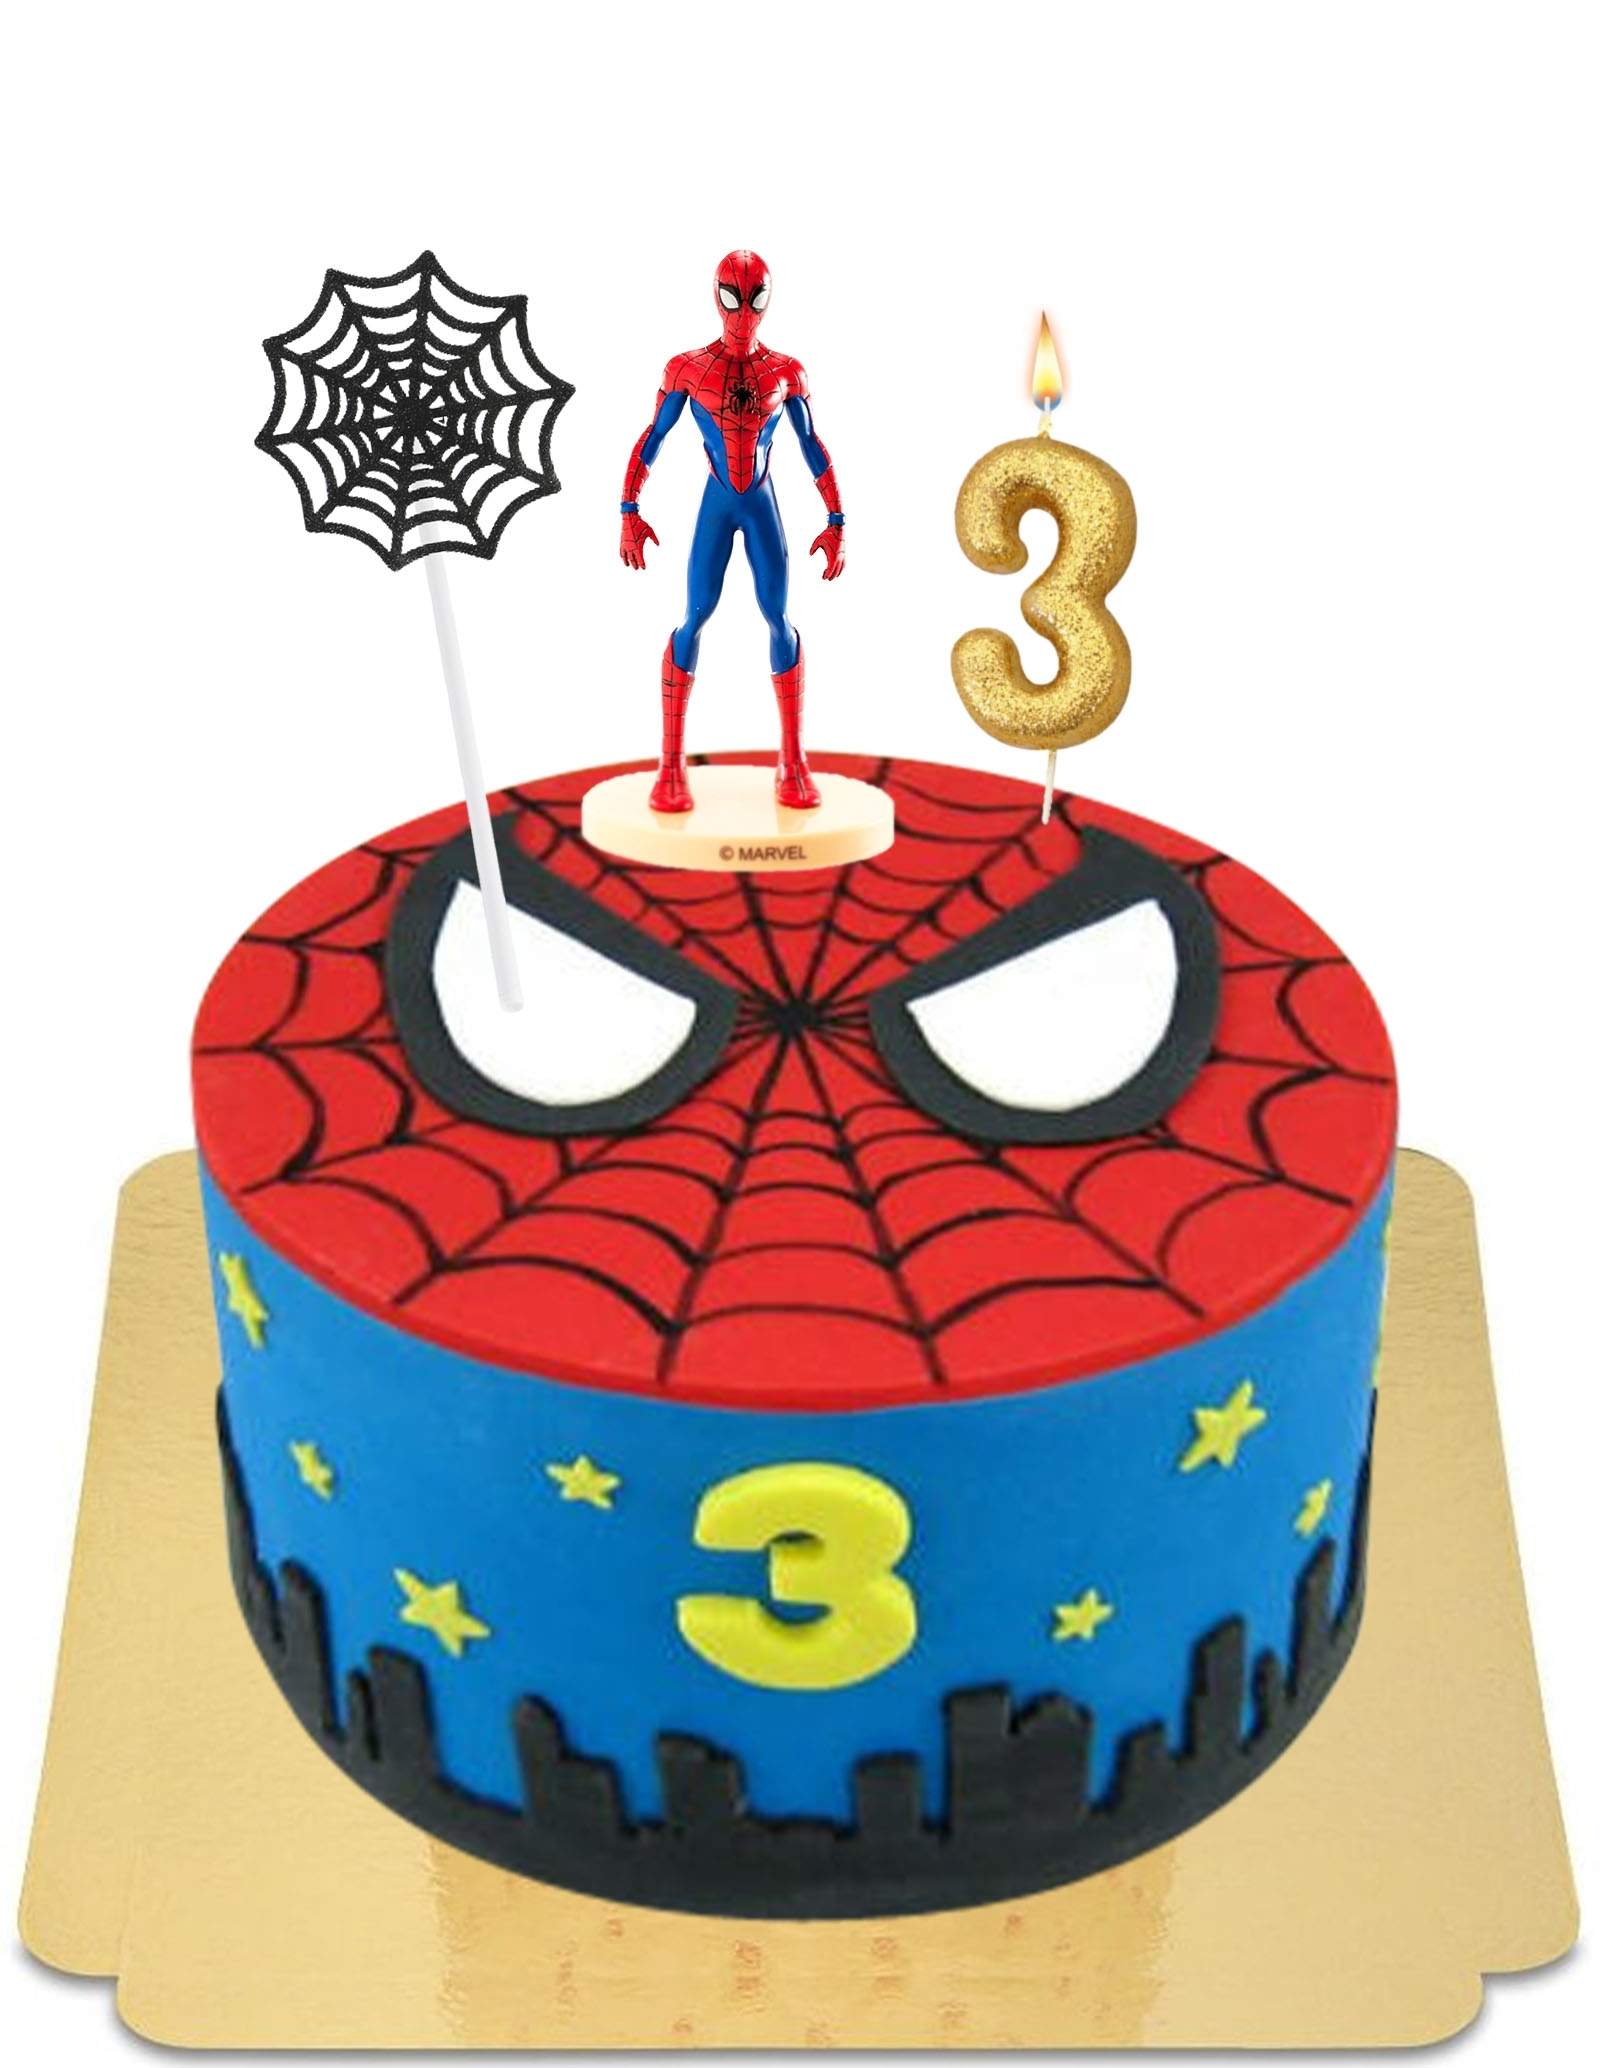 Gâteau Spiderman, gâteau d'anniversaire Spiderman, gâteau